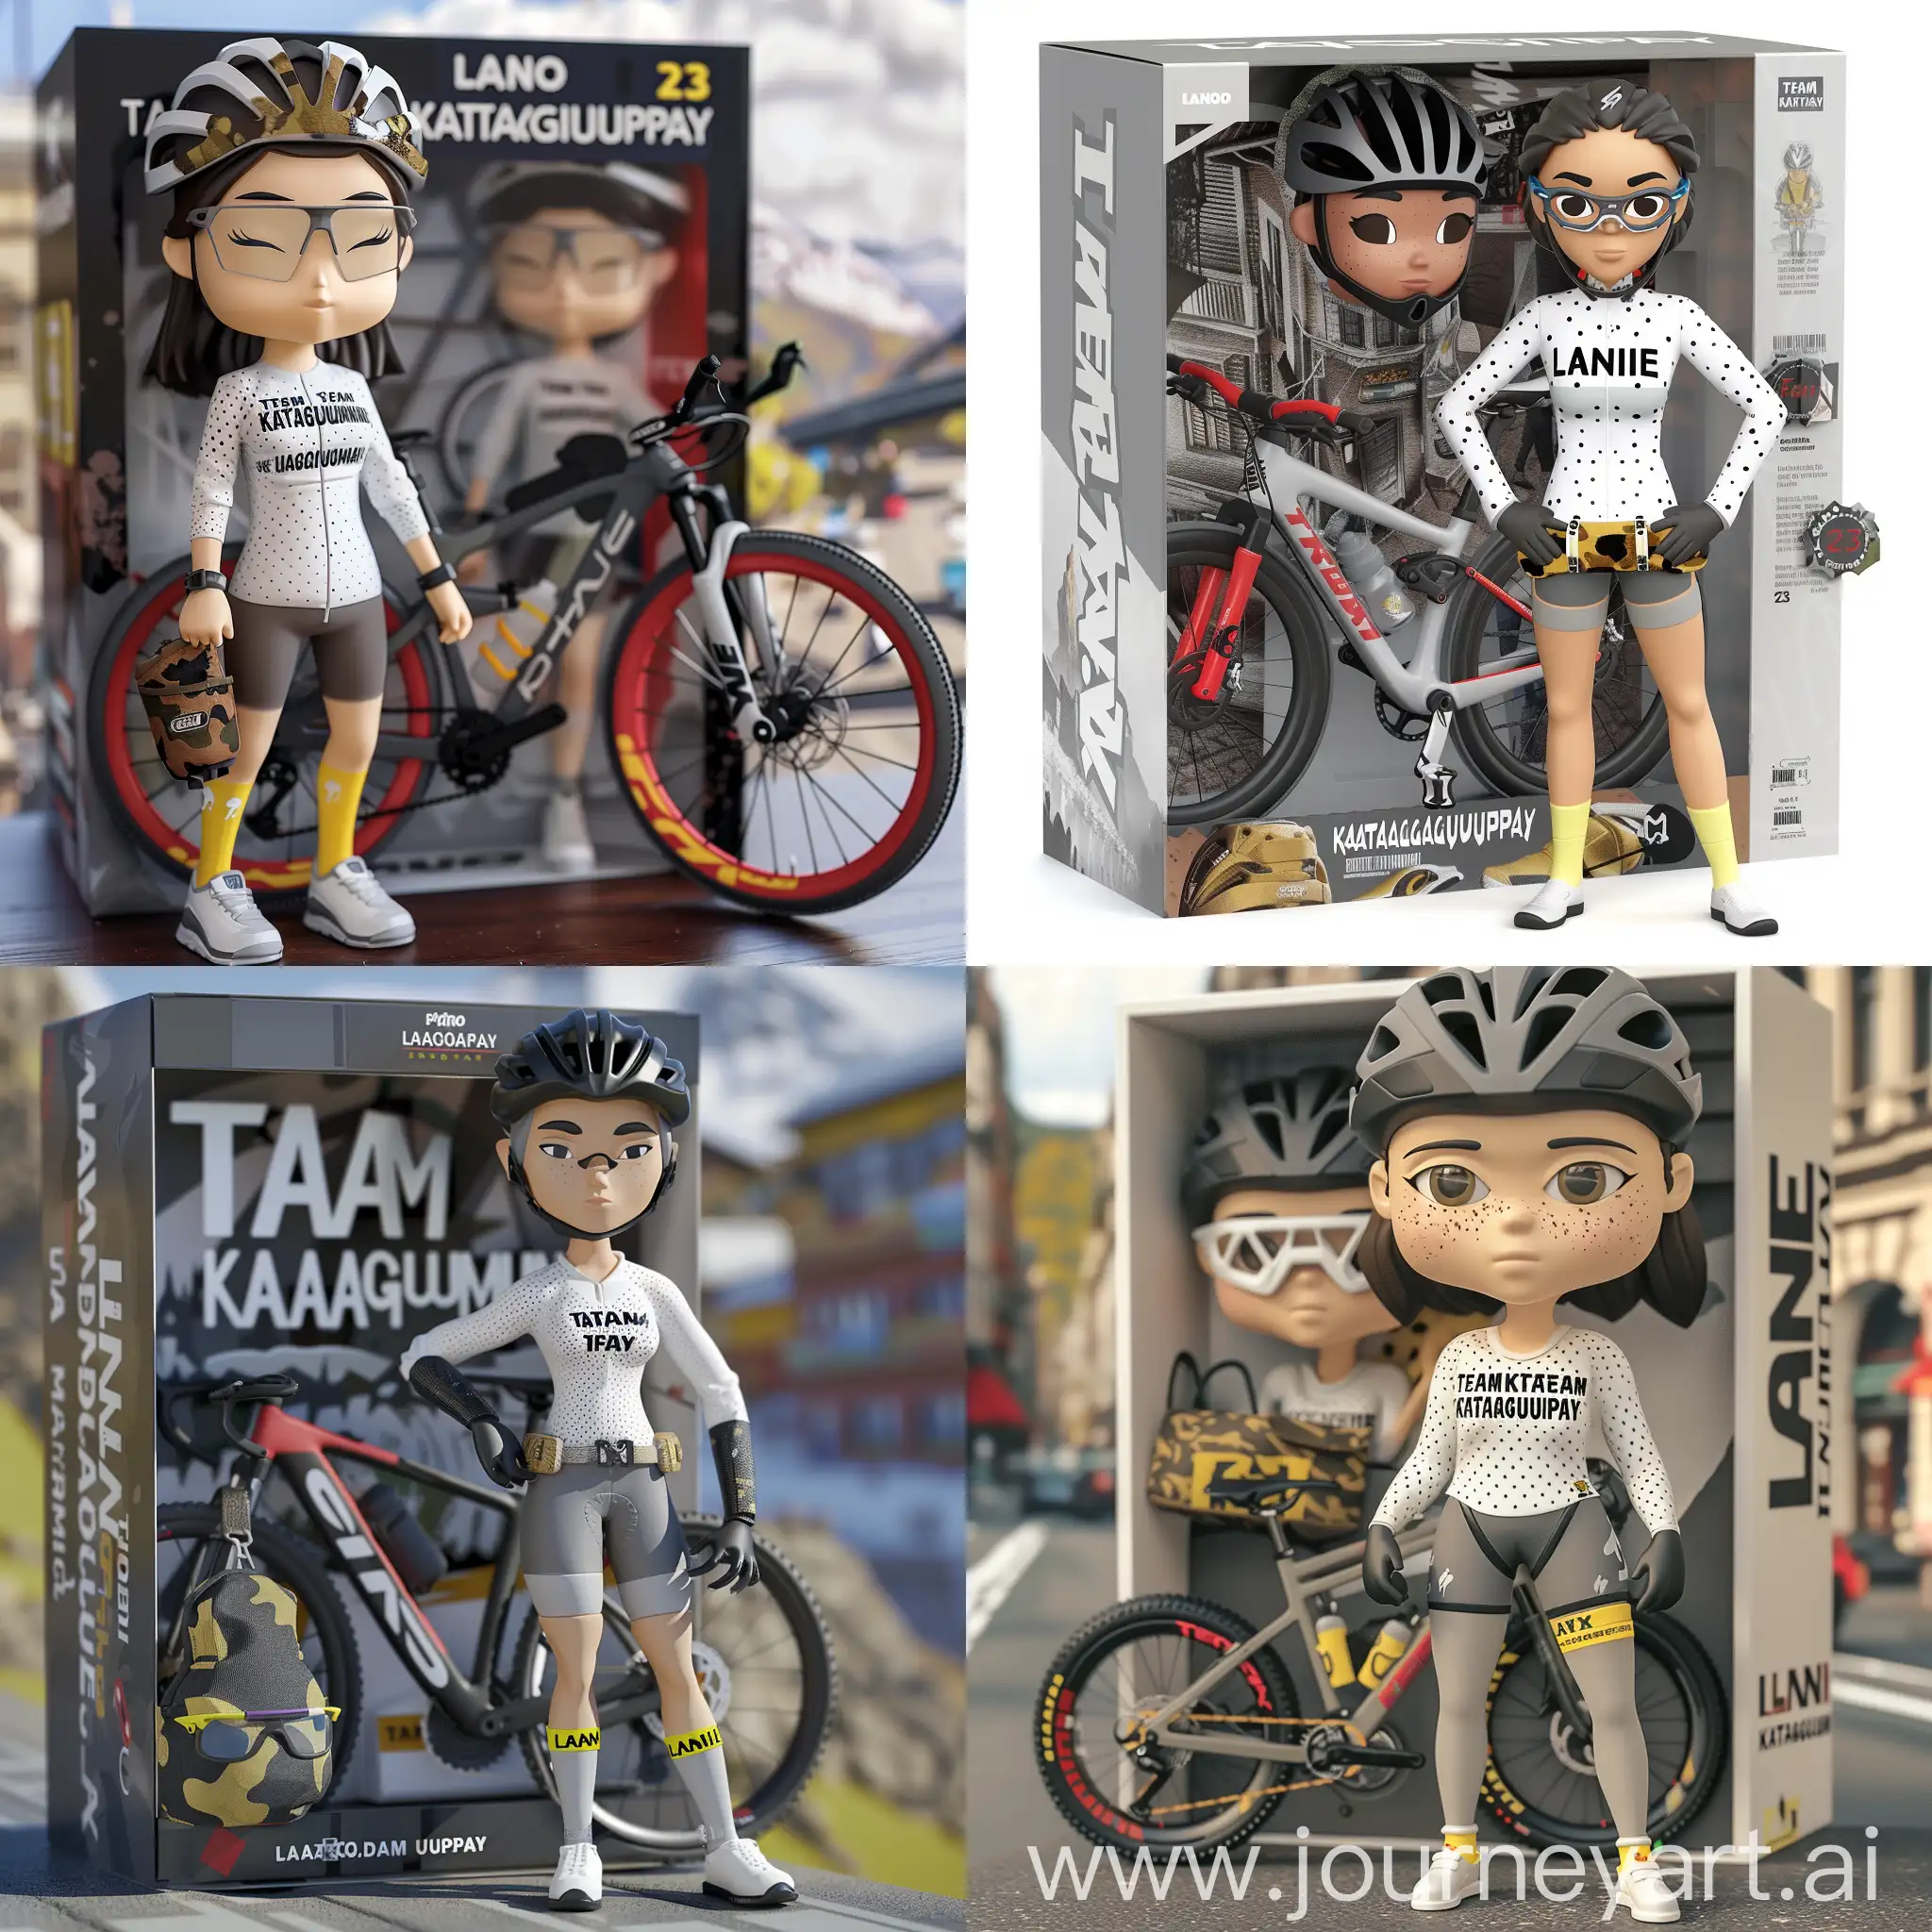 Lanie-Funko-Figure-Urban-Cyclist-in-TEAM-KATAGUMPAY-Attire